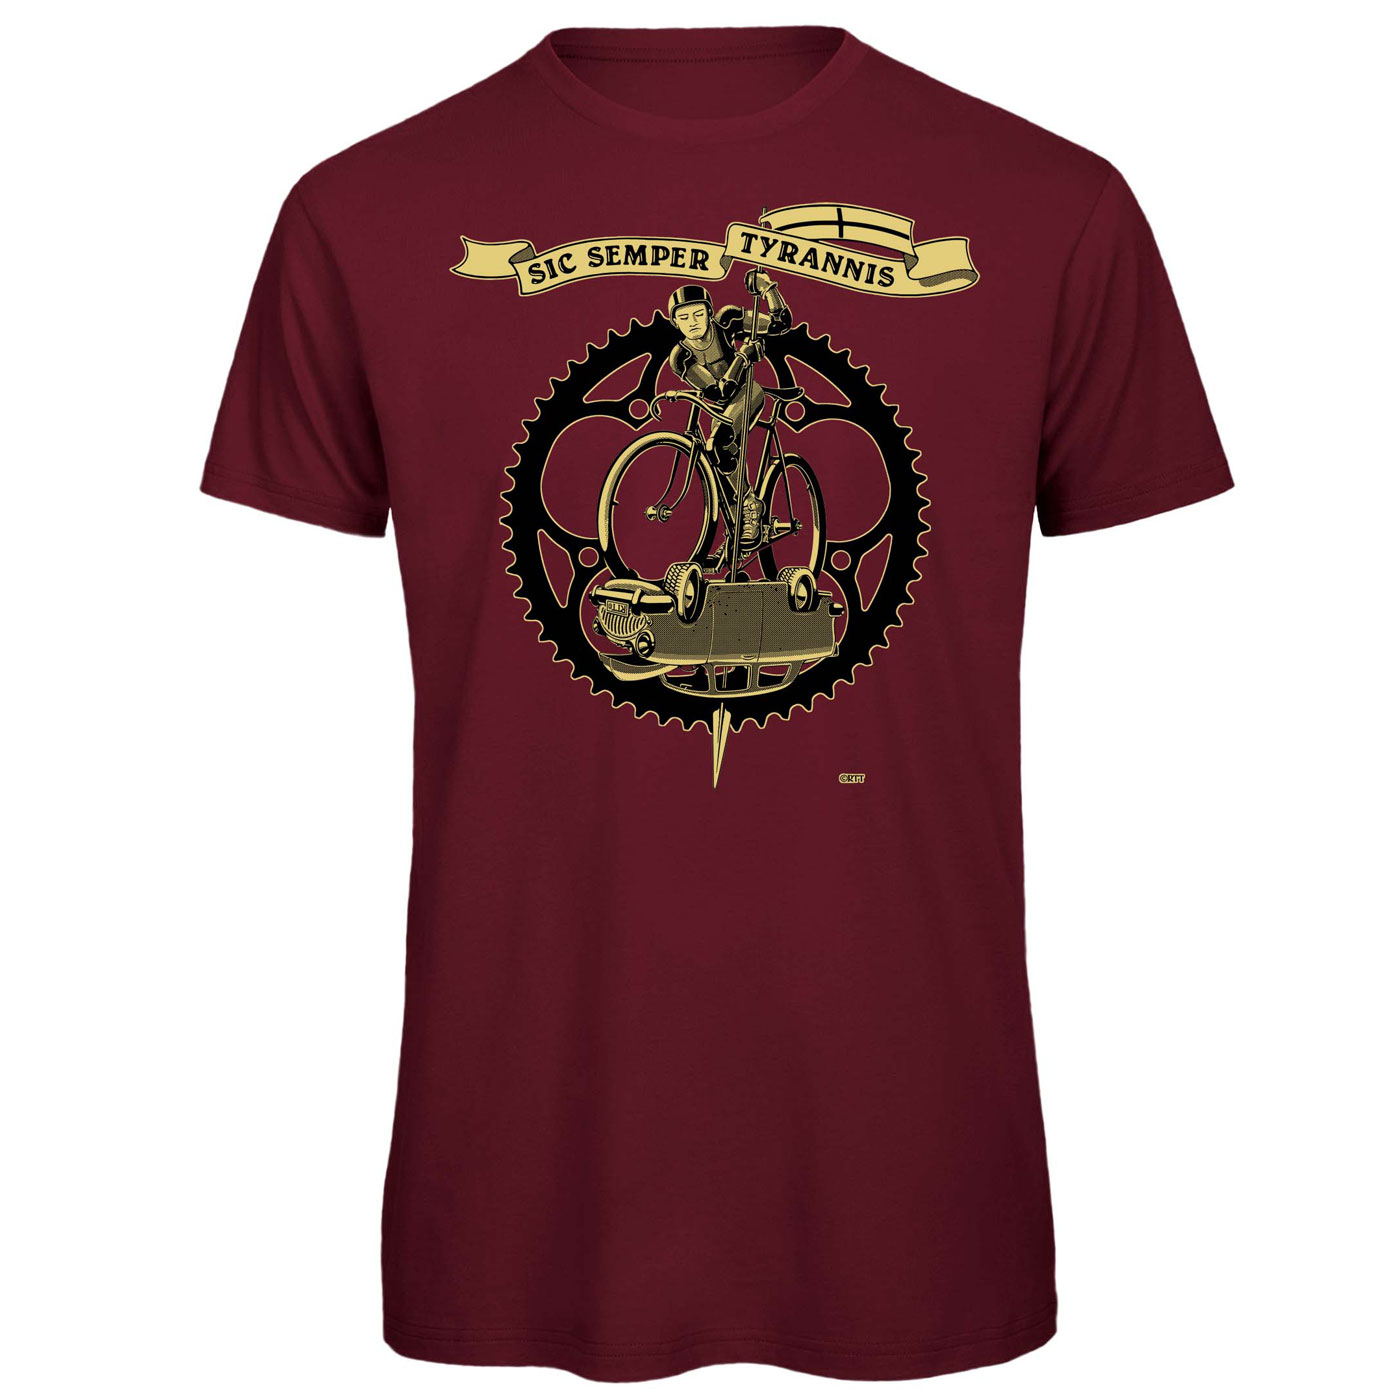 Foto de RTTshirts Camiseta Bicicleta - San Jorge - bordeaux